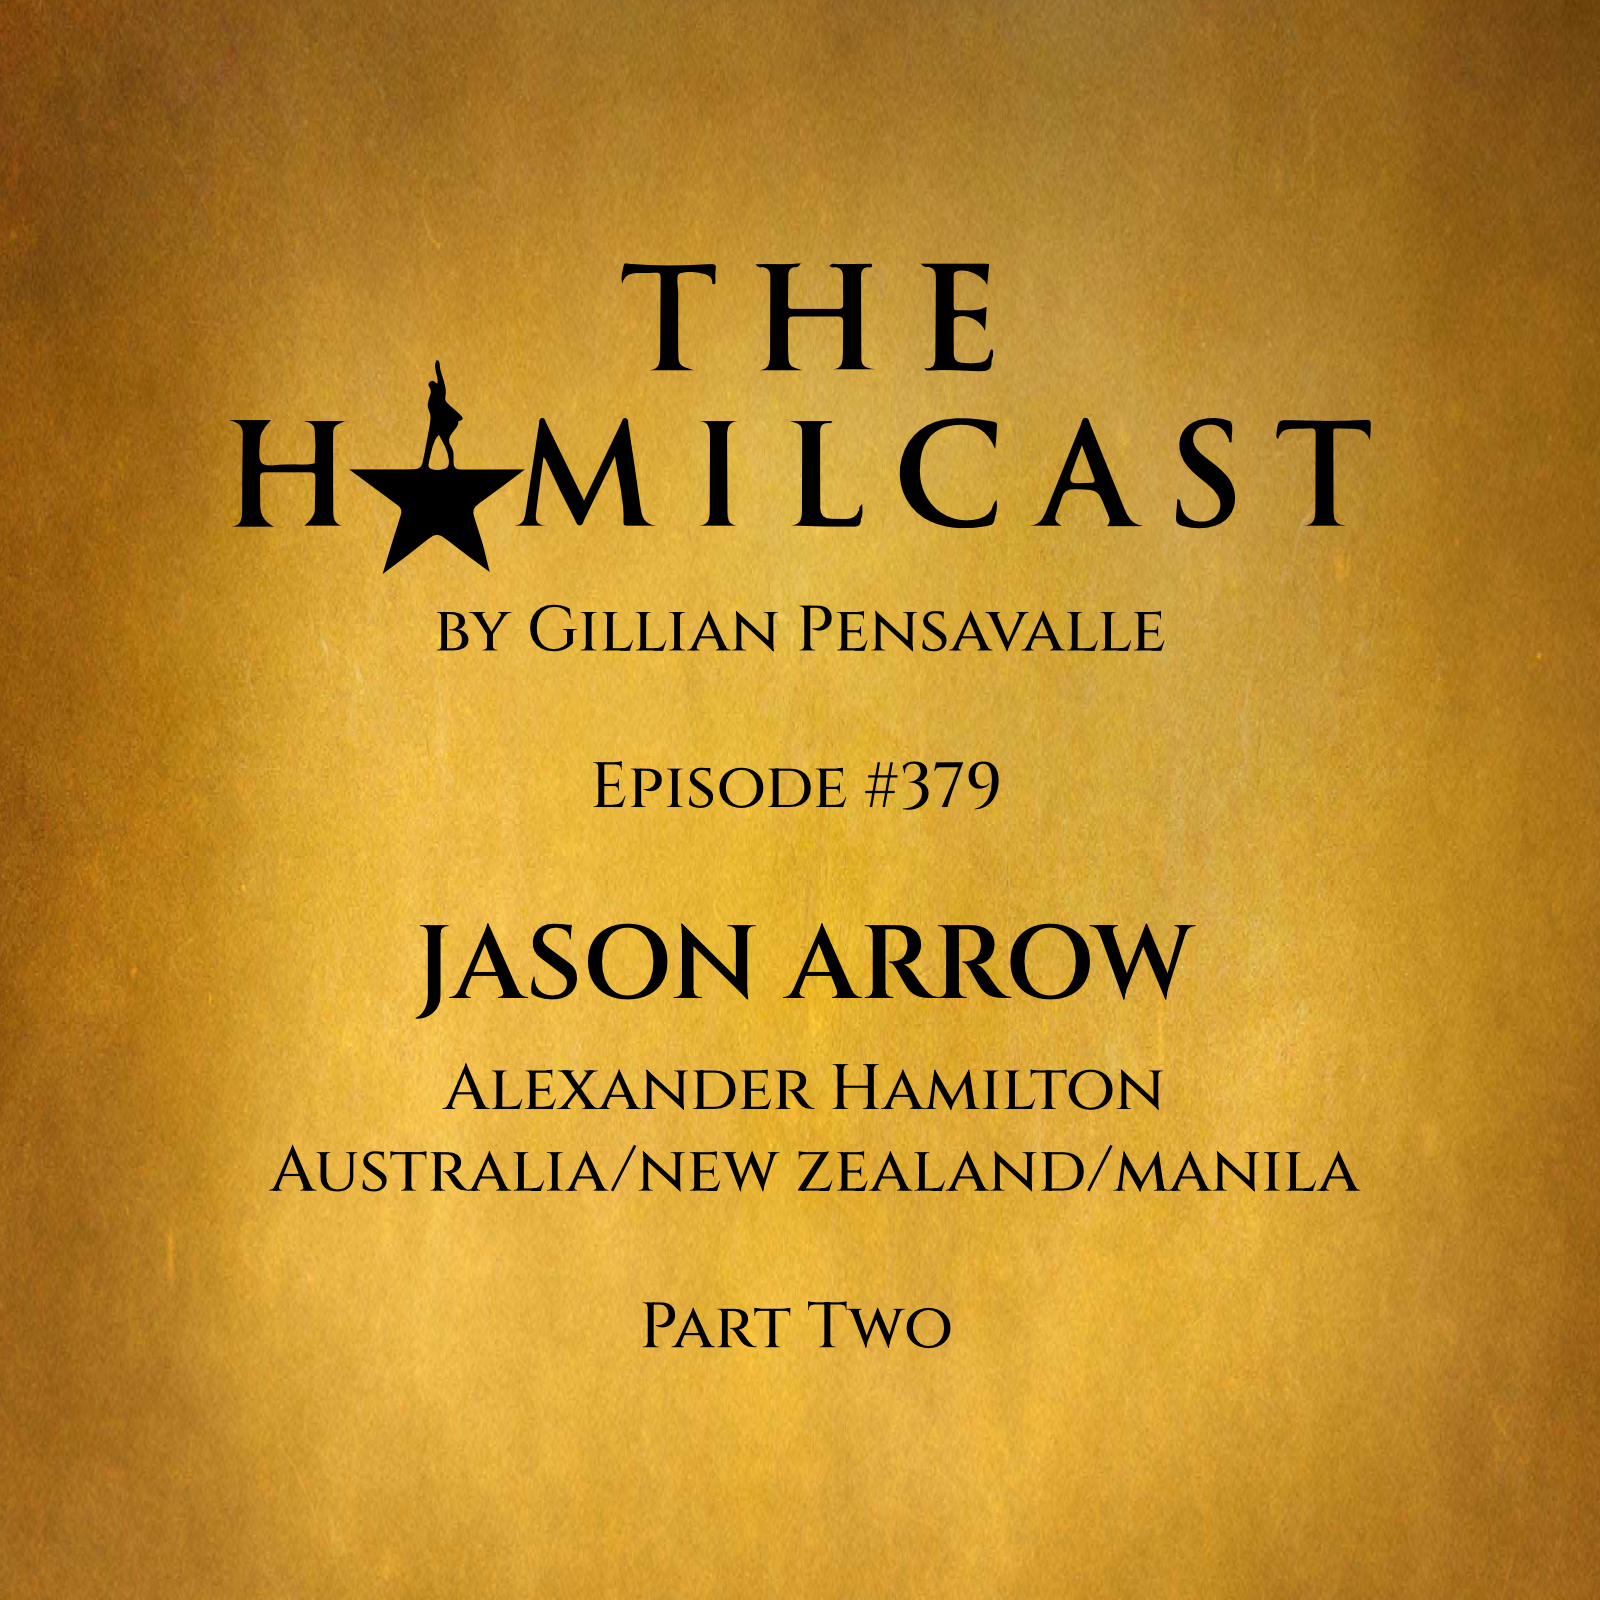 Jason Arrow. Alexander Hamilton in Australia, New Zealand, and Manila. Part Two.